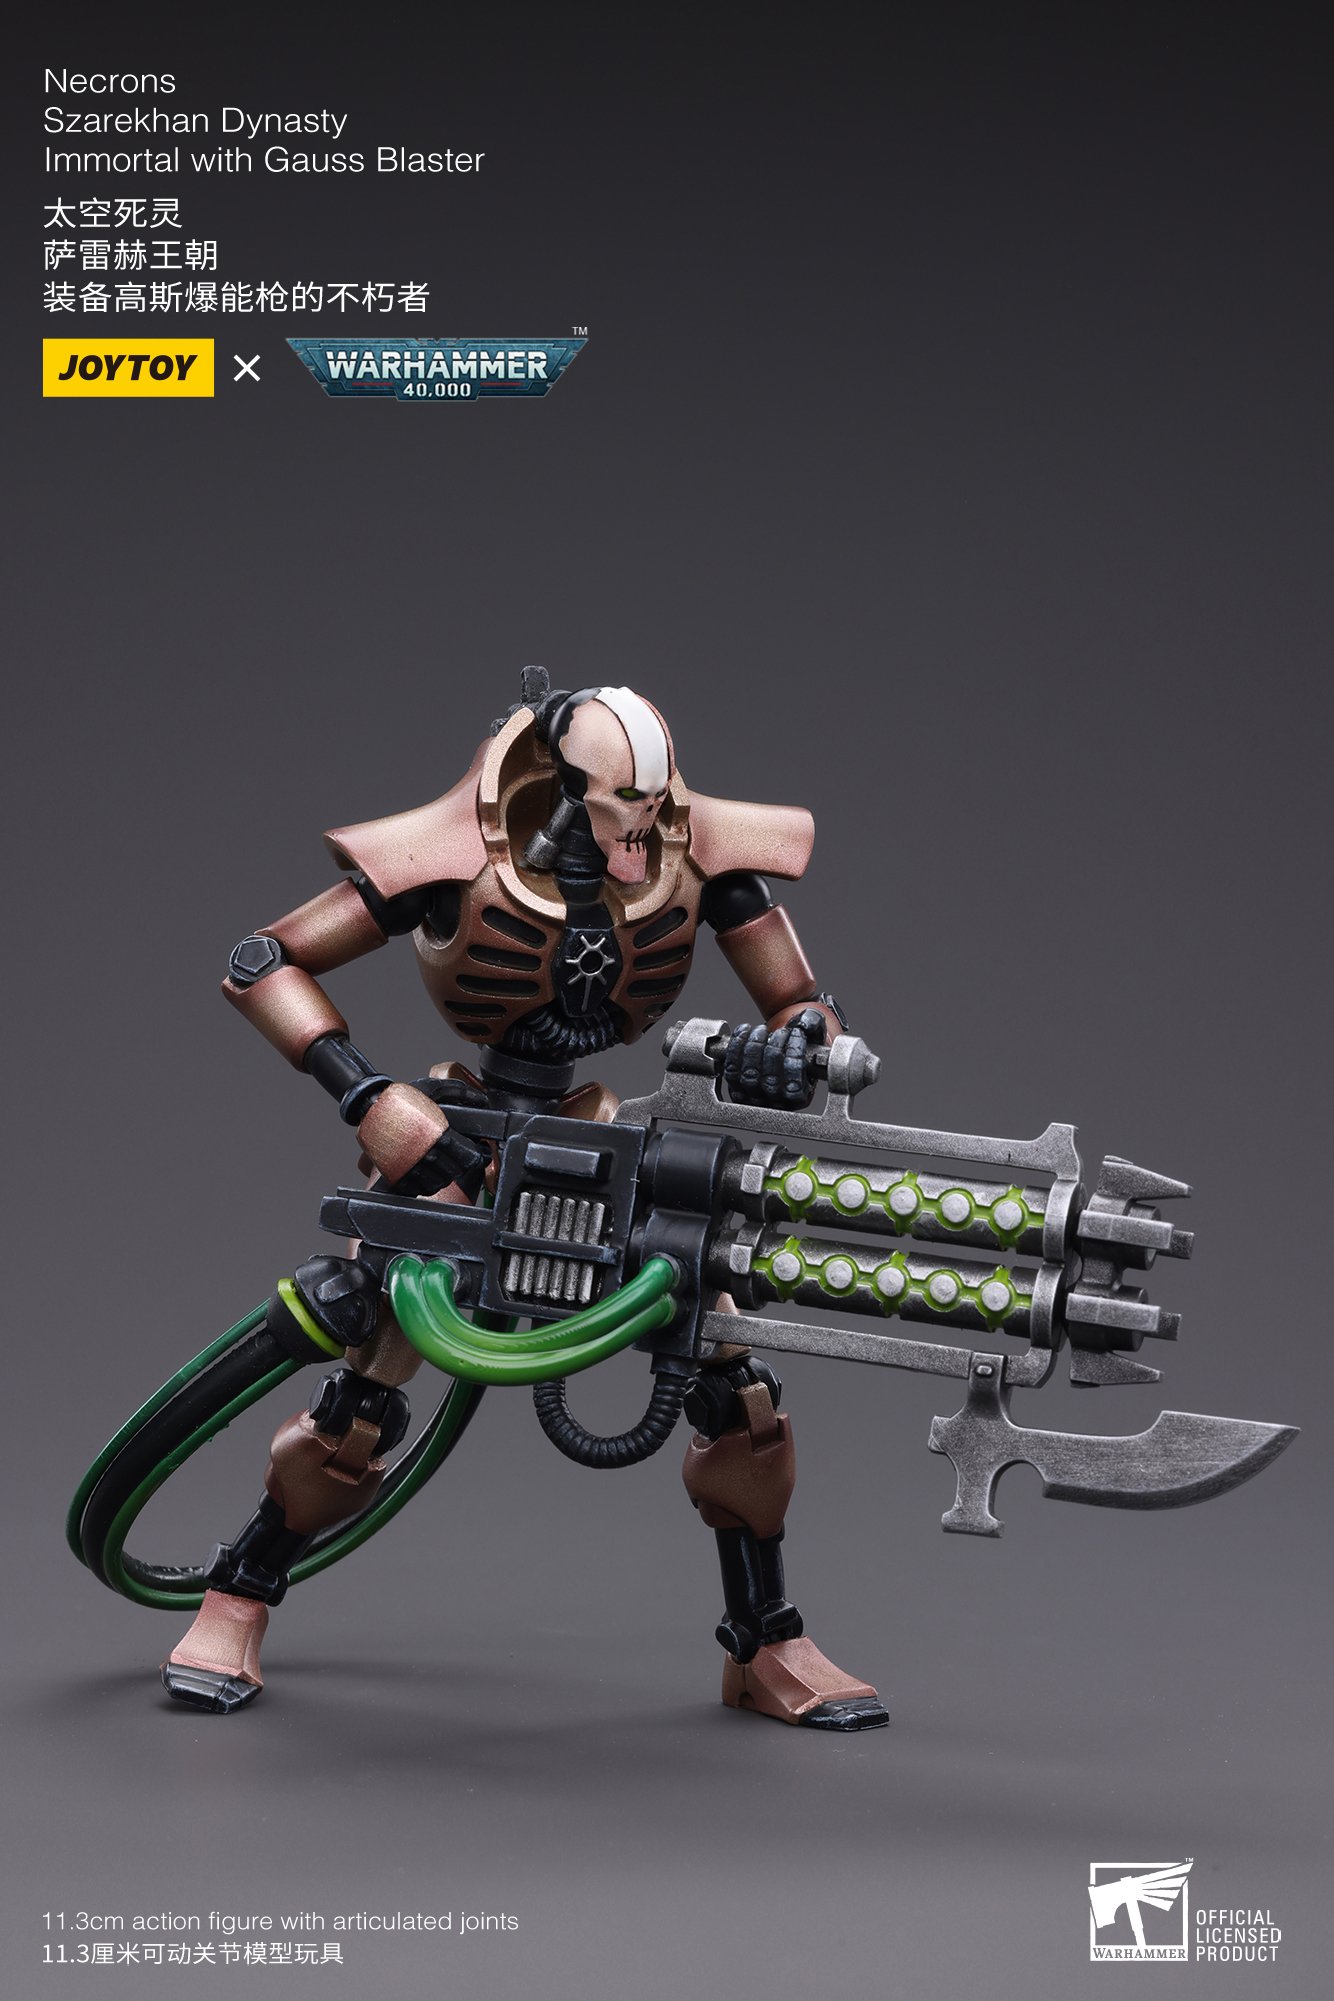 JoyToy Action Figure Warhammer 40K Necrons Szarekhan Dynasty lmmortal with Gauss Blaster